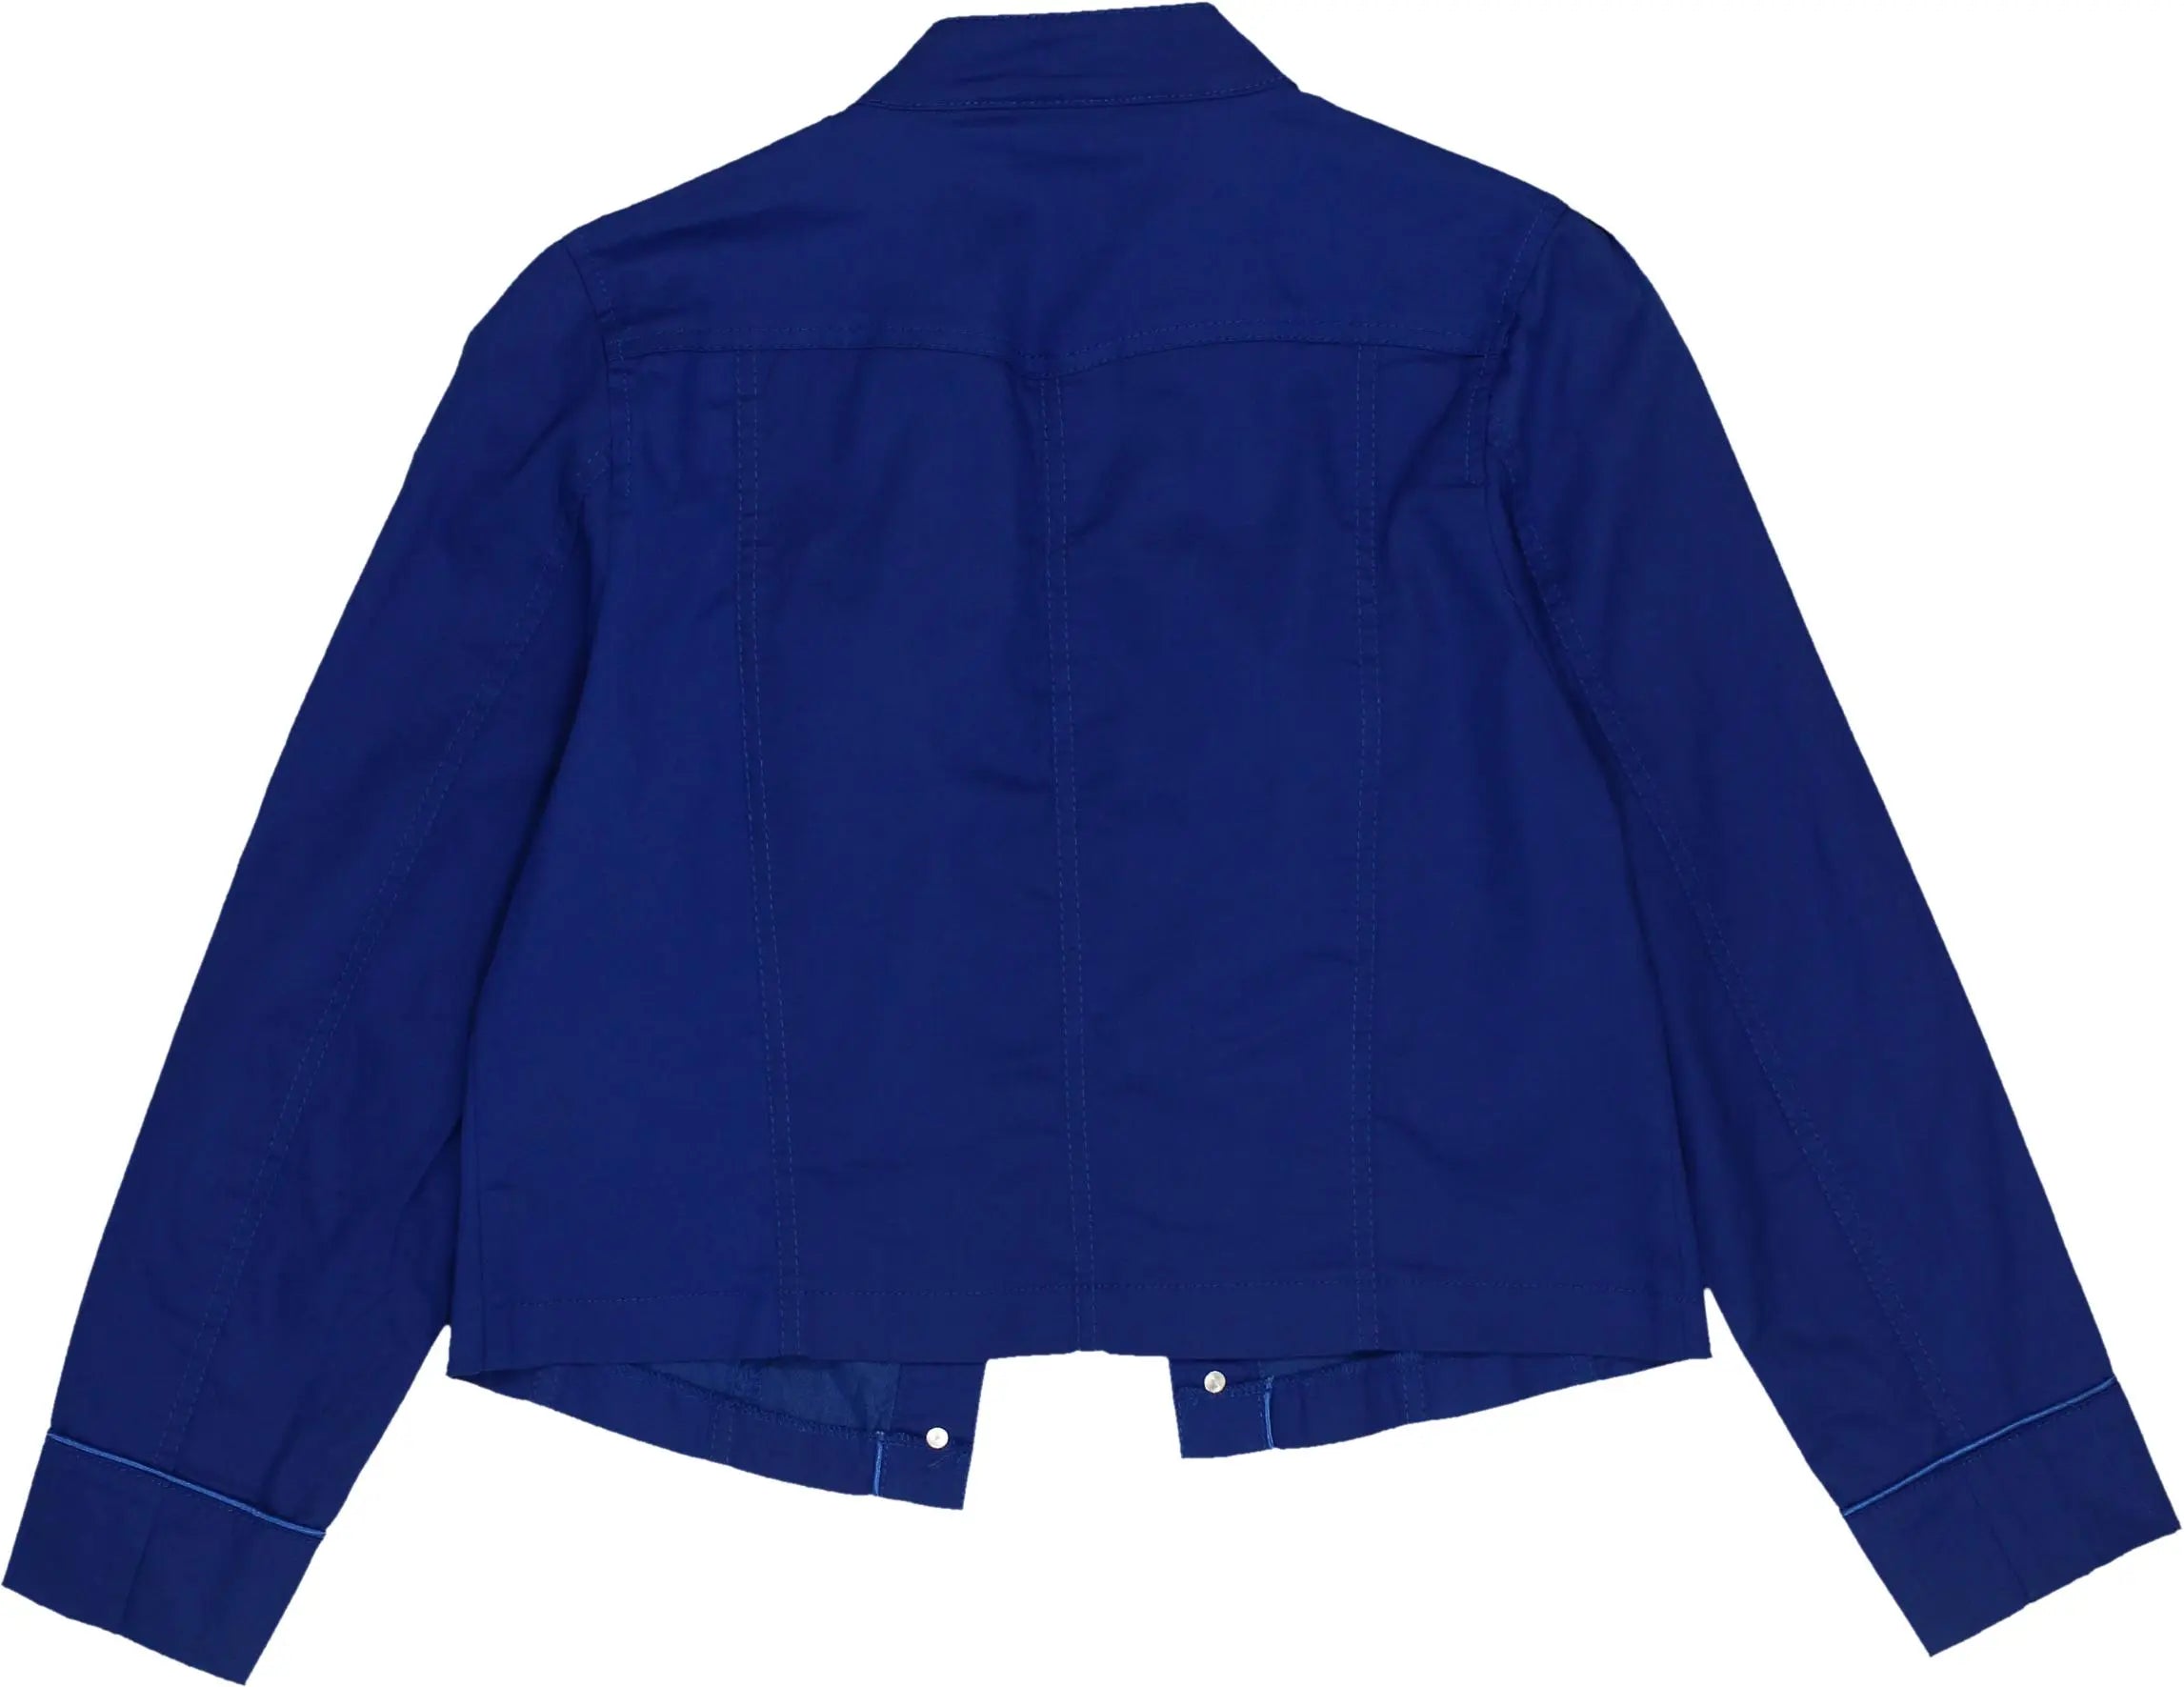 Miss Etam - Blue Jacket- ThriftTale.com - Vintage and second handclothing